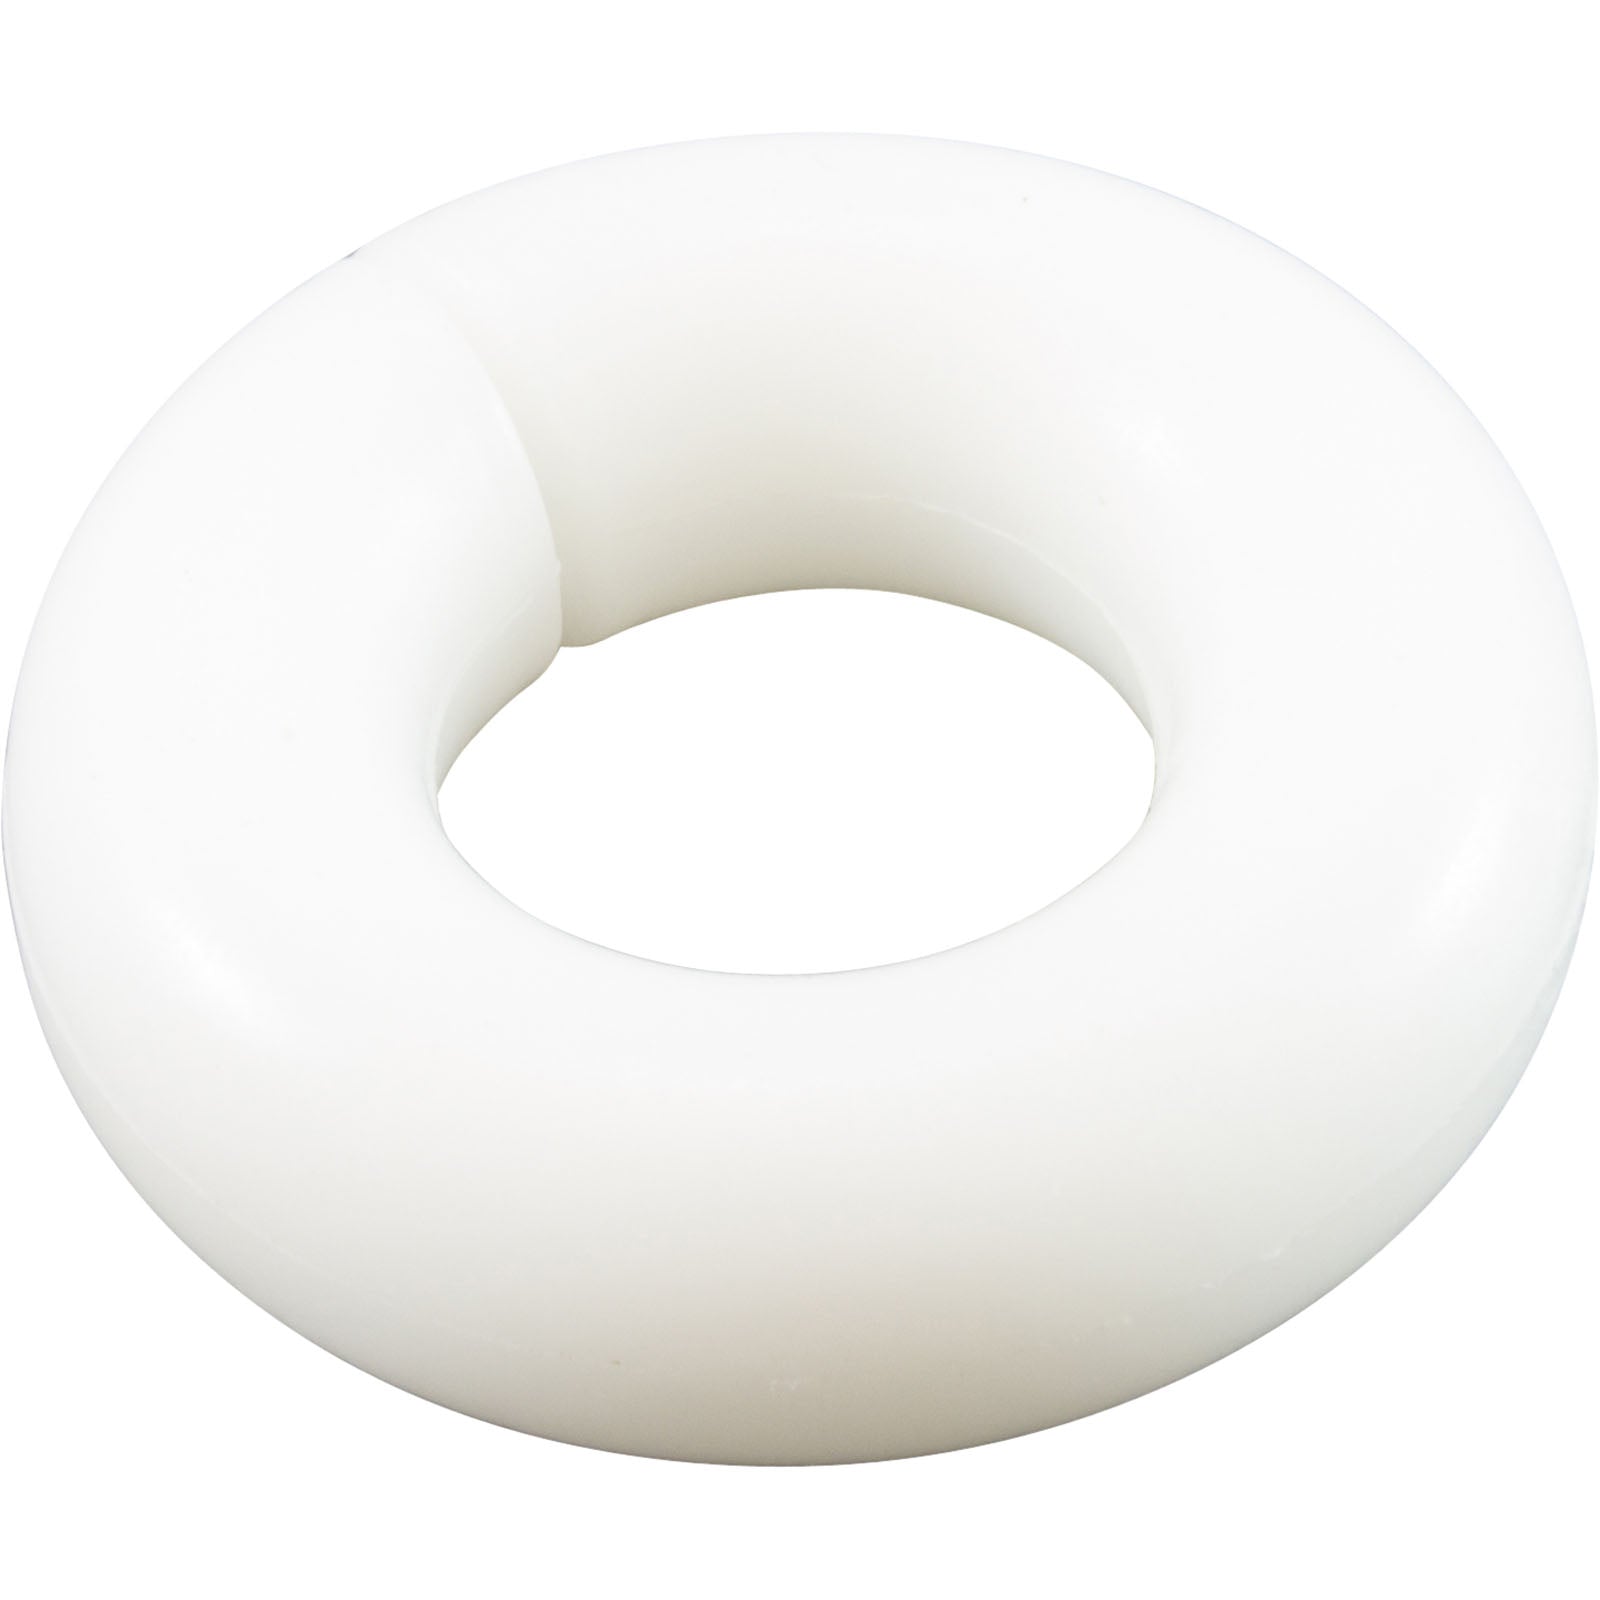 Sweep Hose Wear Ring, White, Generic B10, 25563-010-000